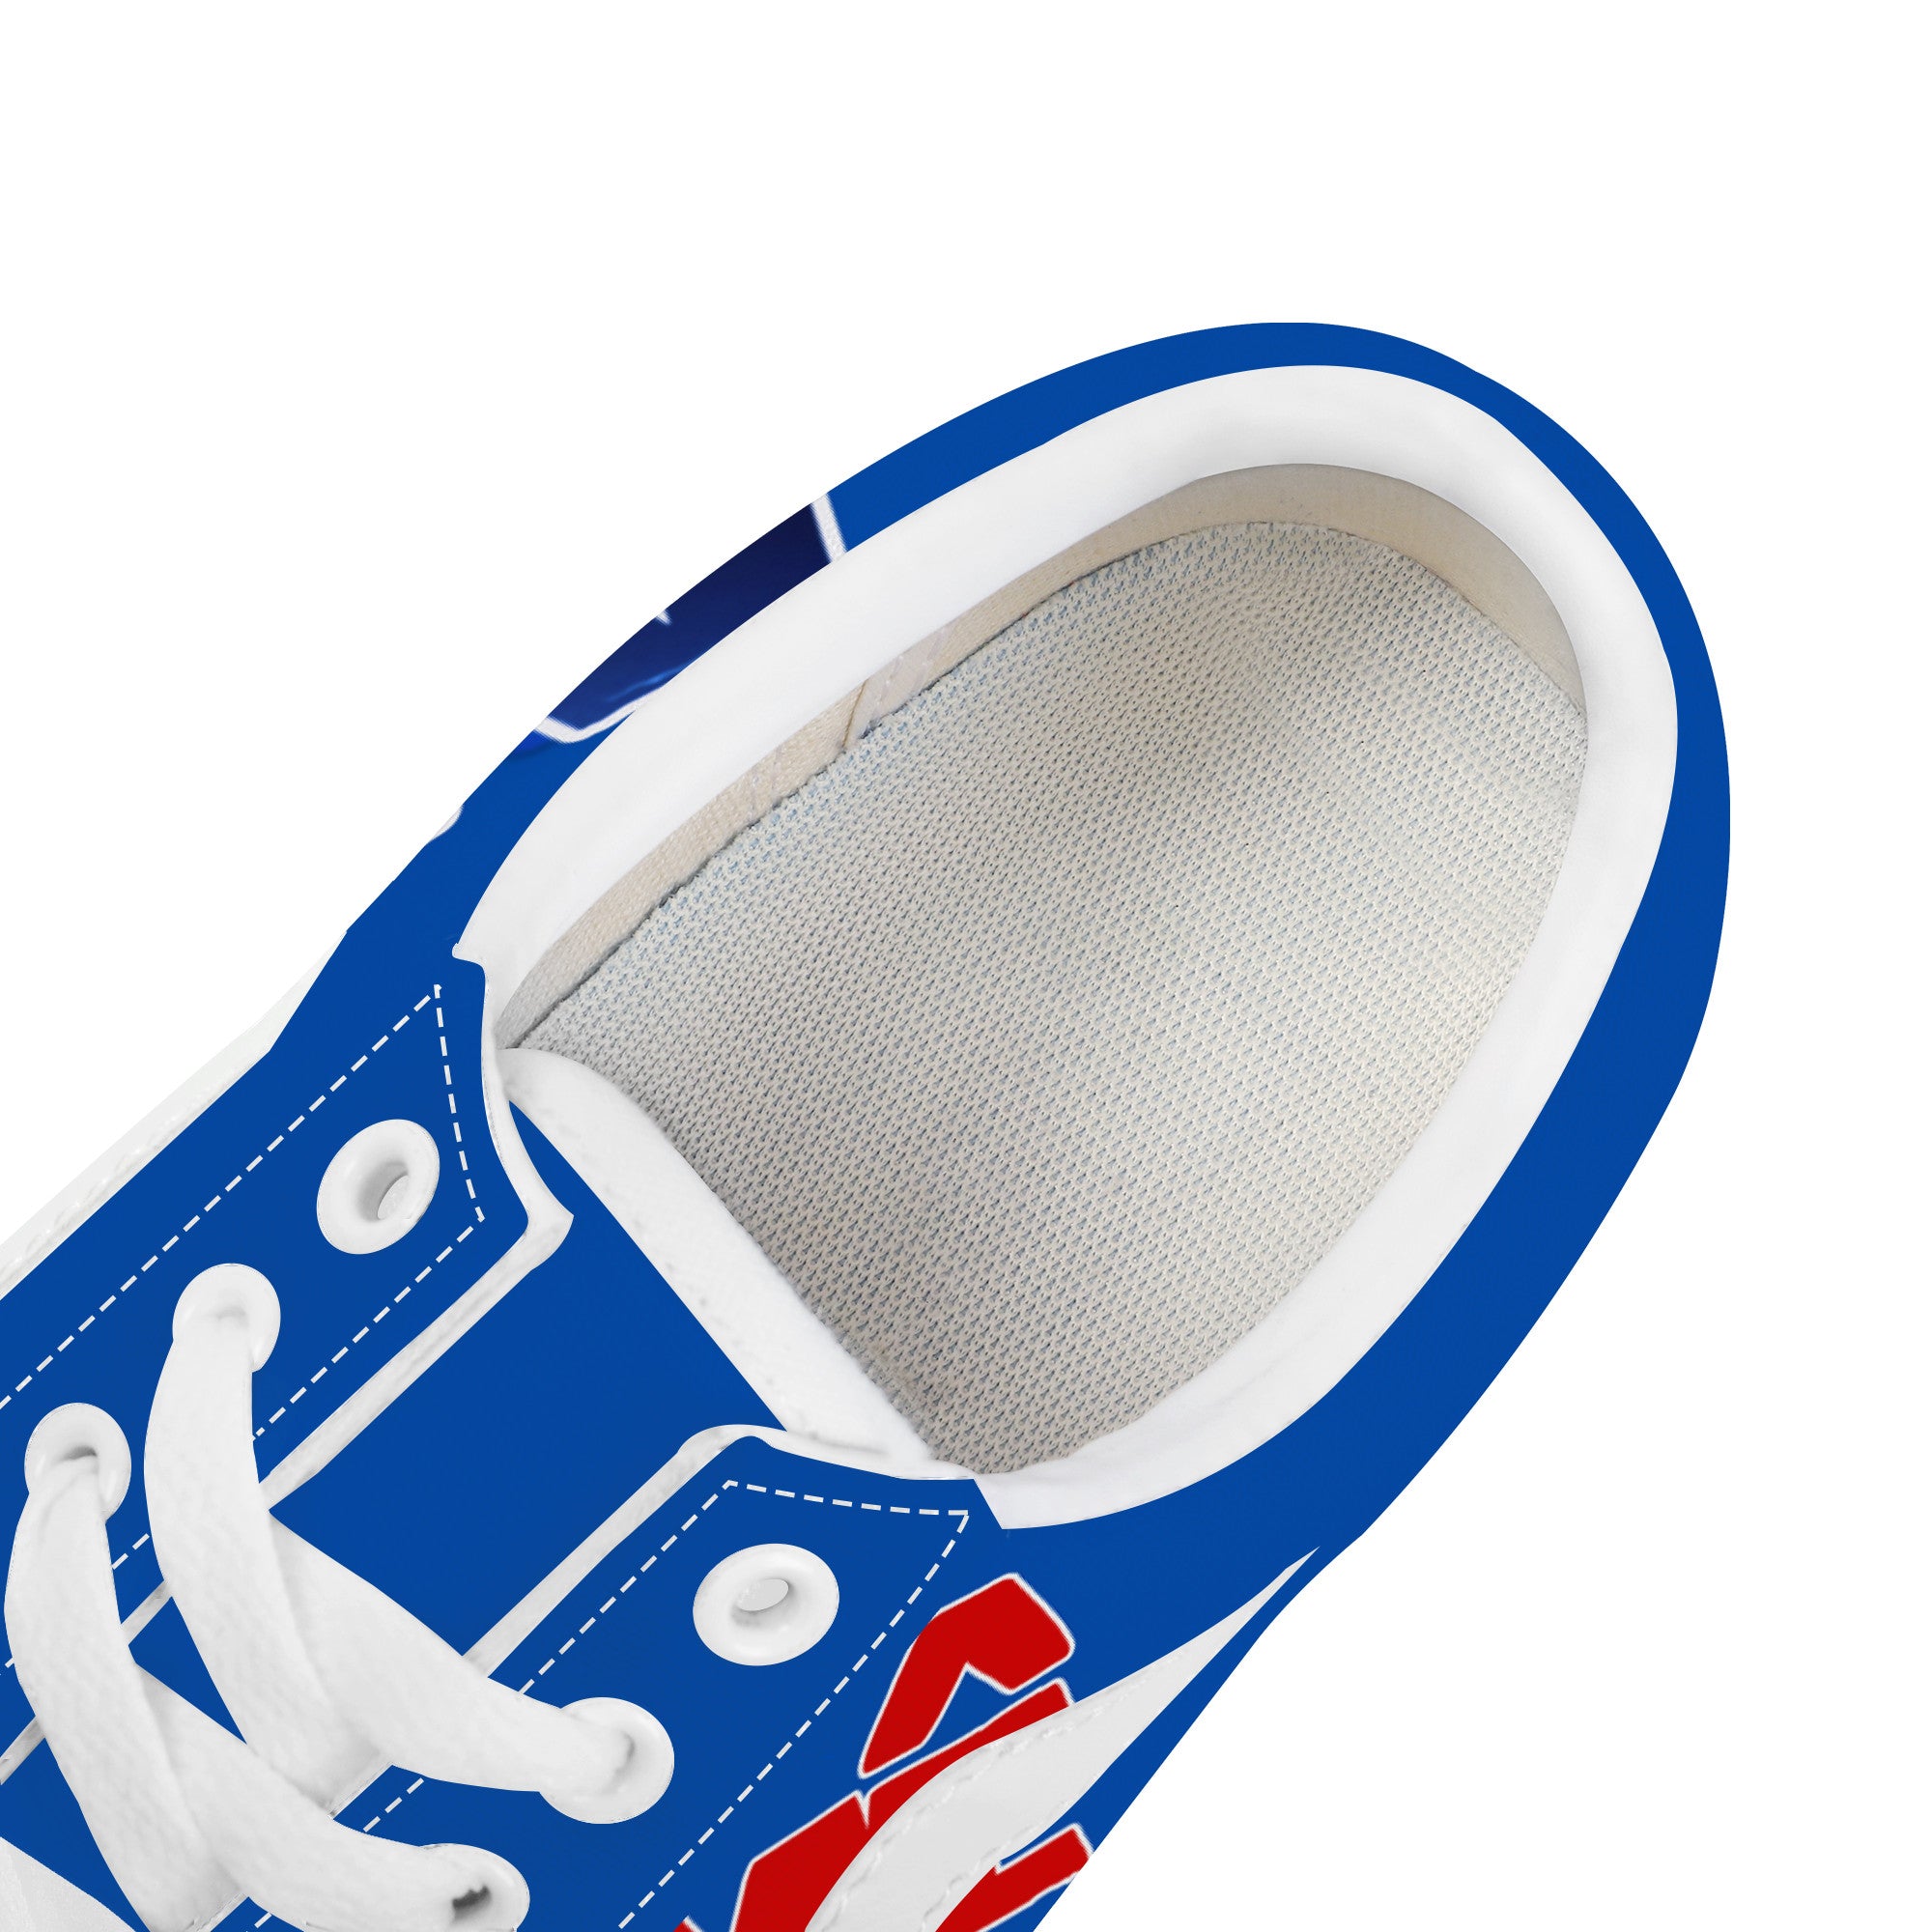 Cool shoes by T. Shomo | Low Tops Customized | Shoe Zero